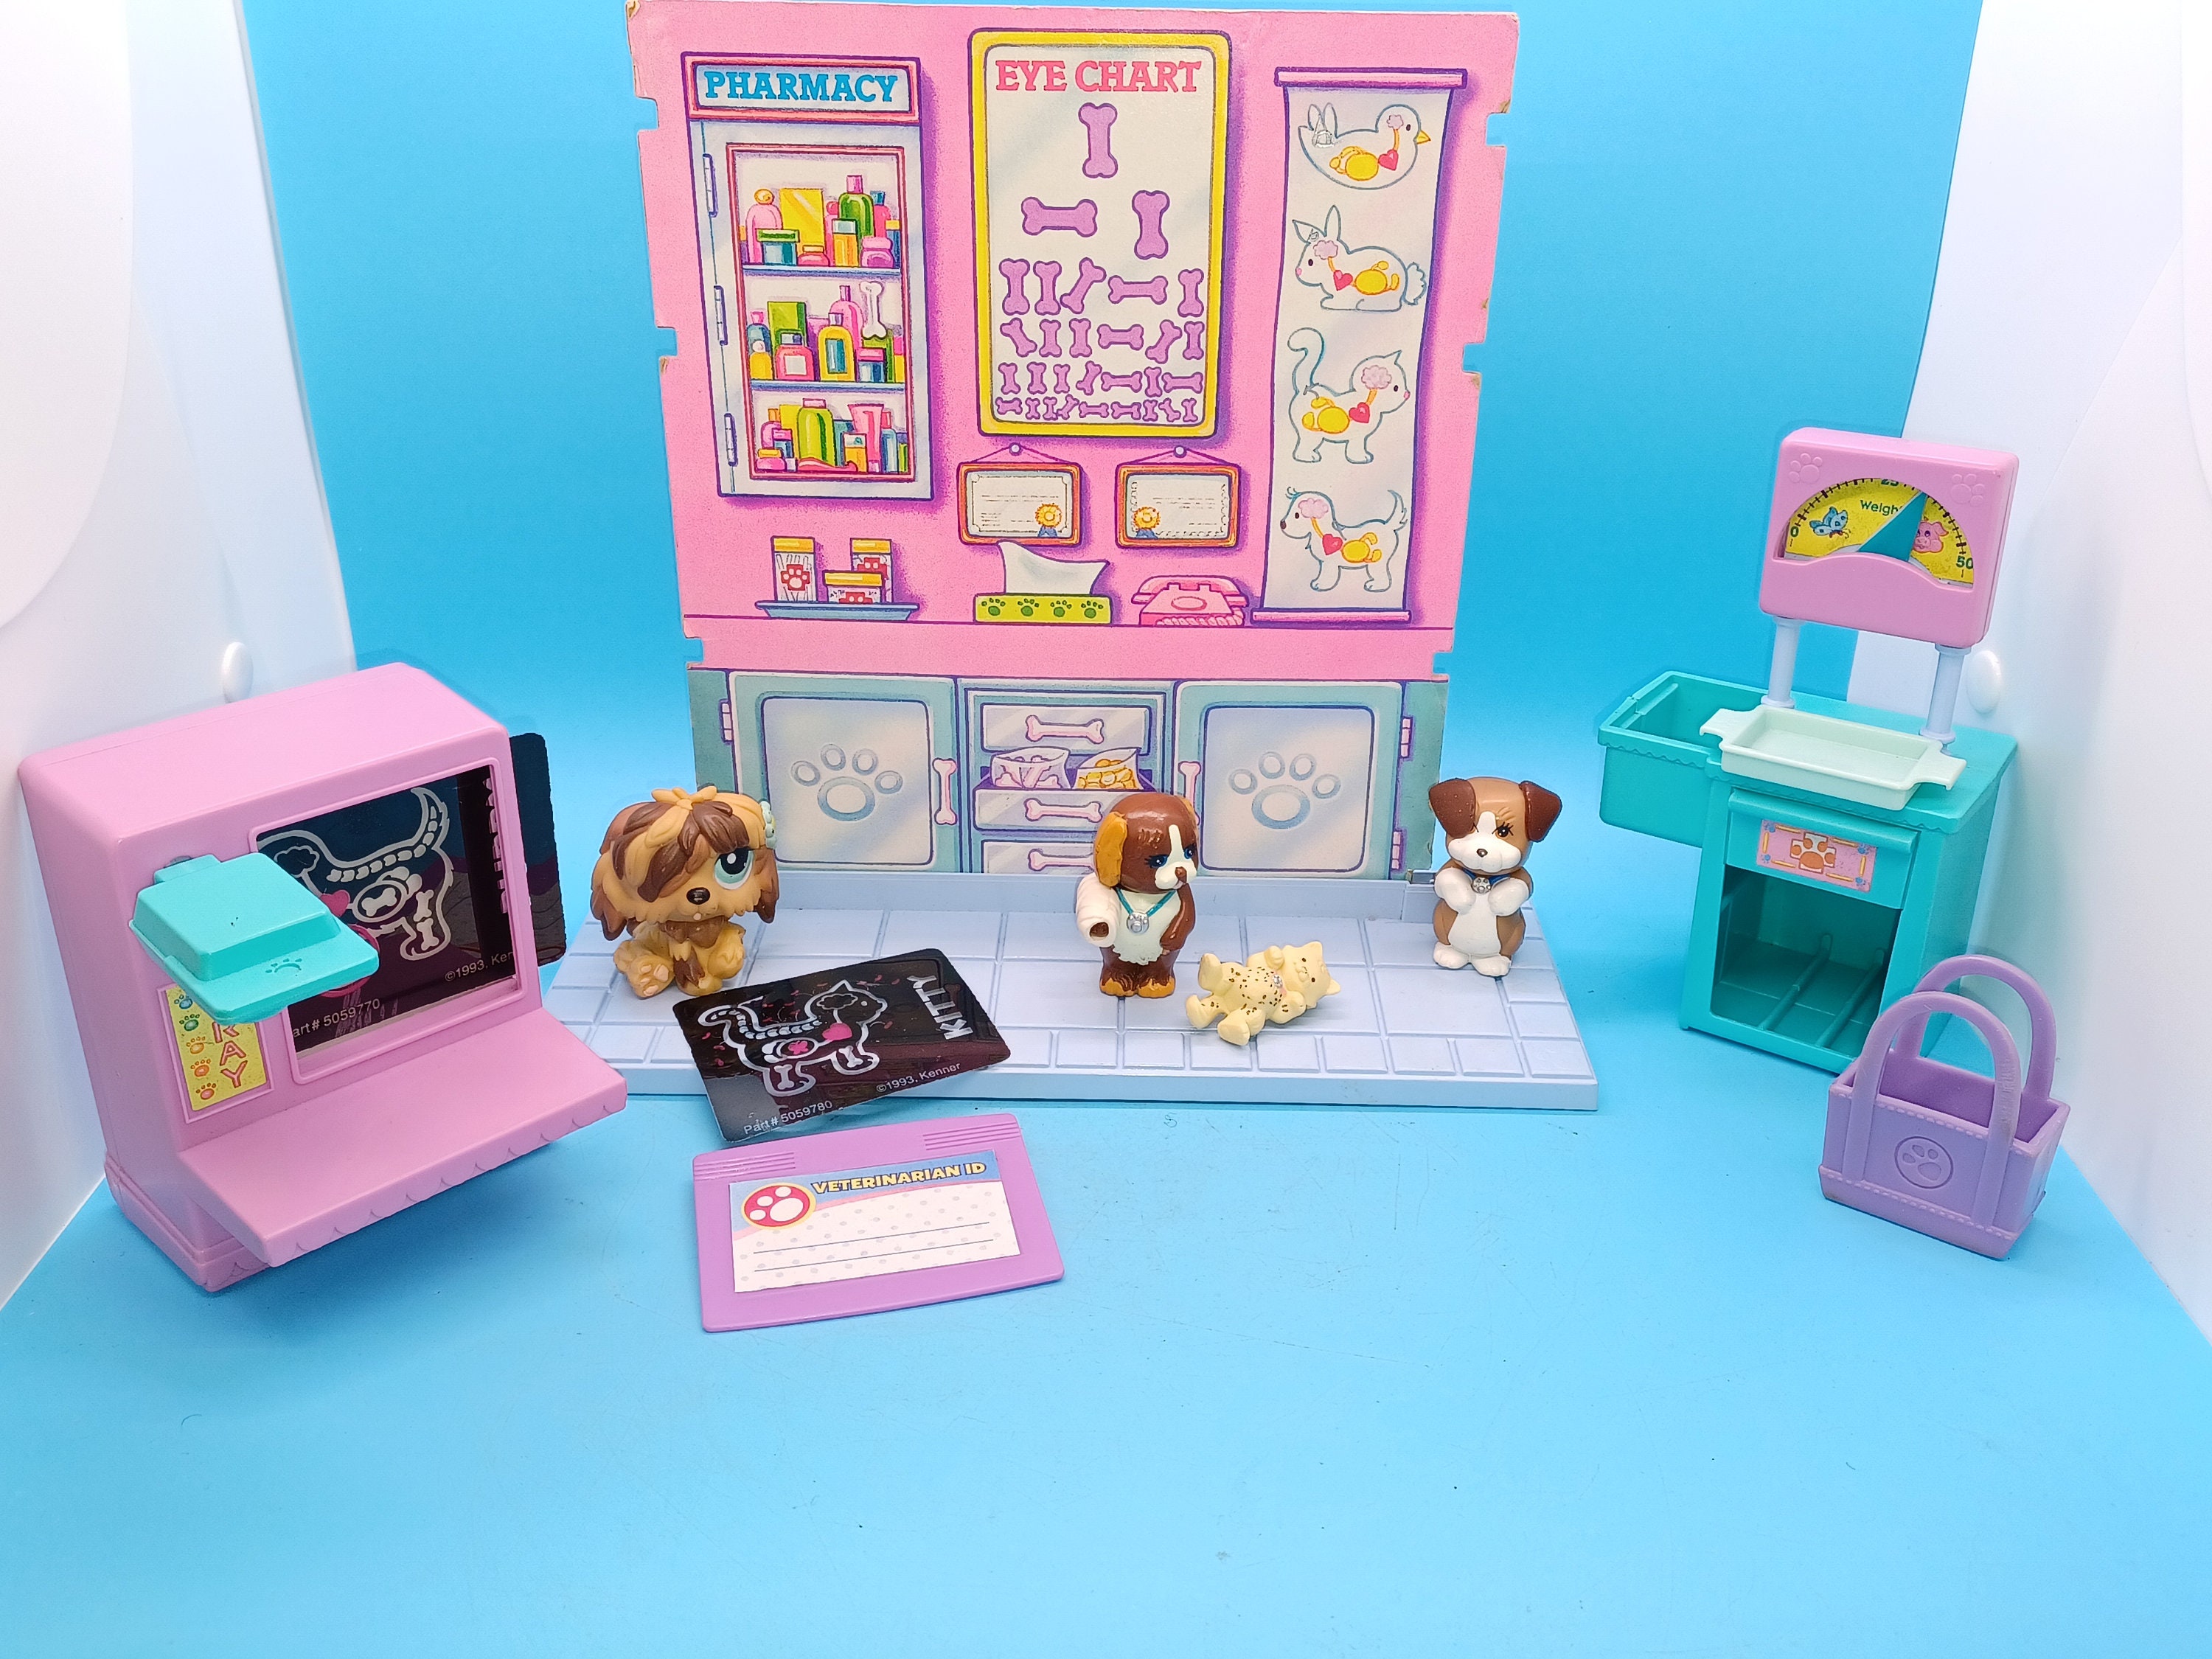 Littlest Pet Shop Pet Tales Playset Assortment